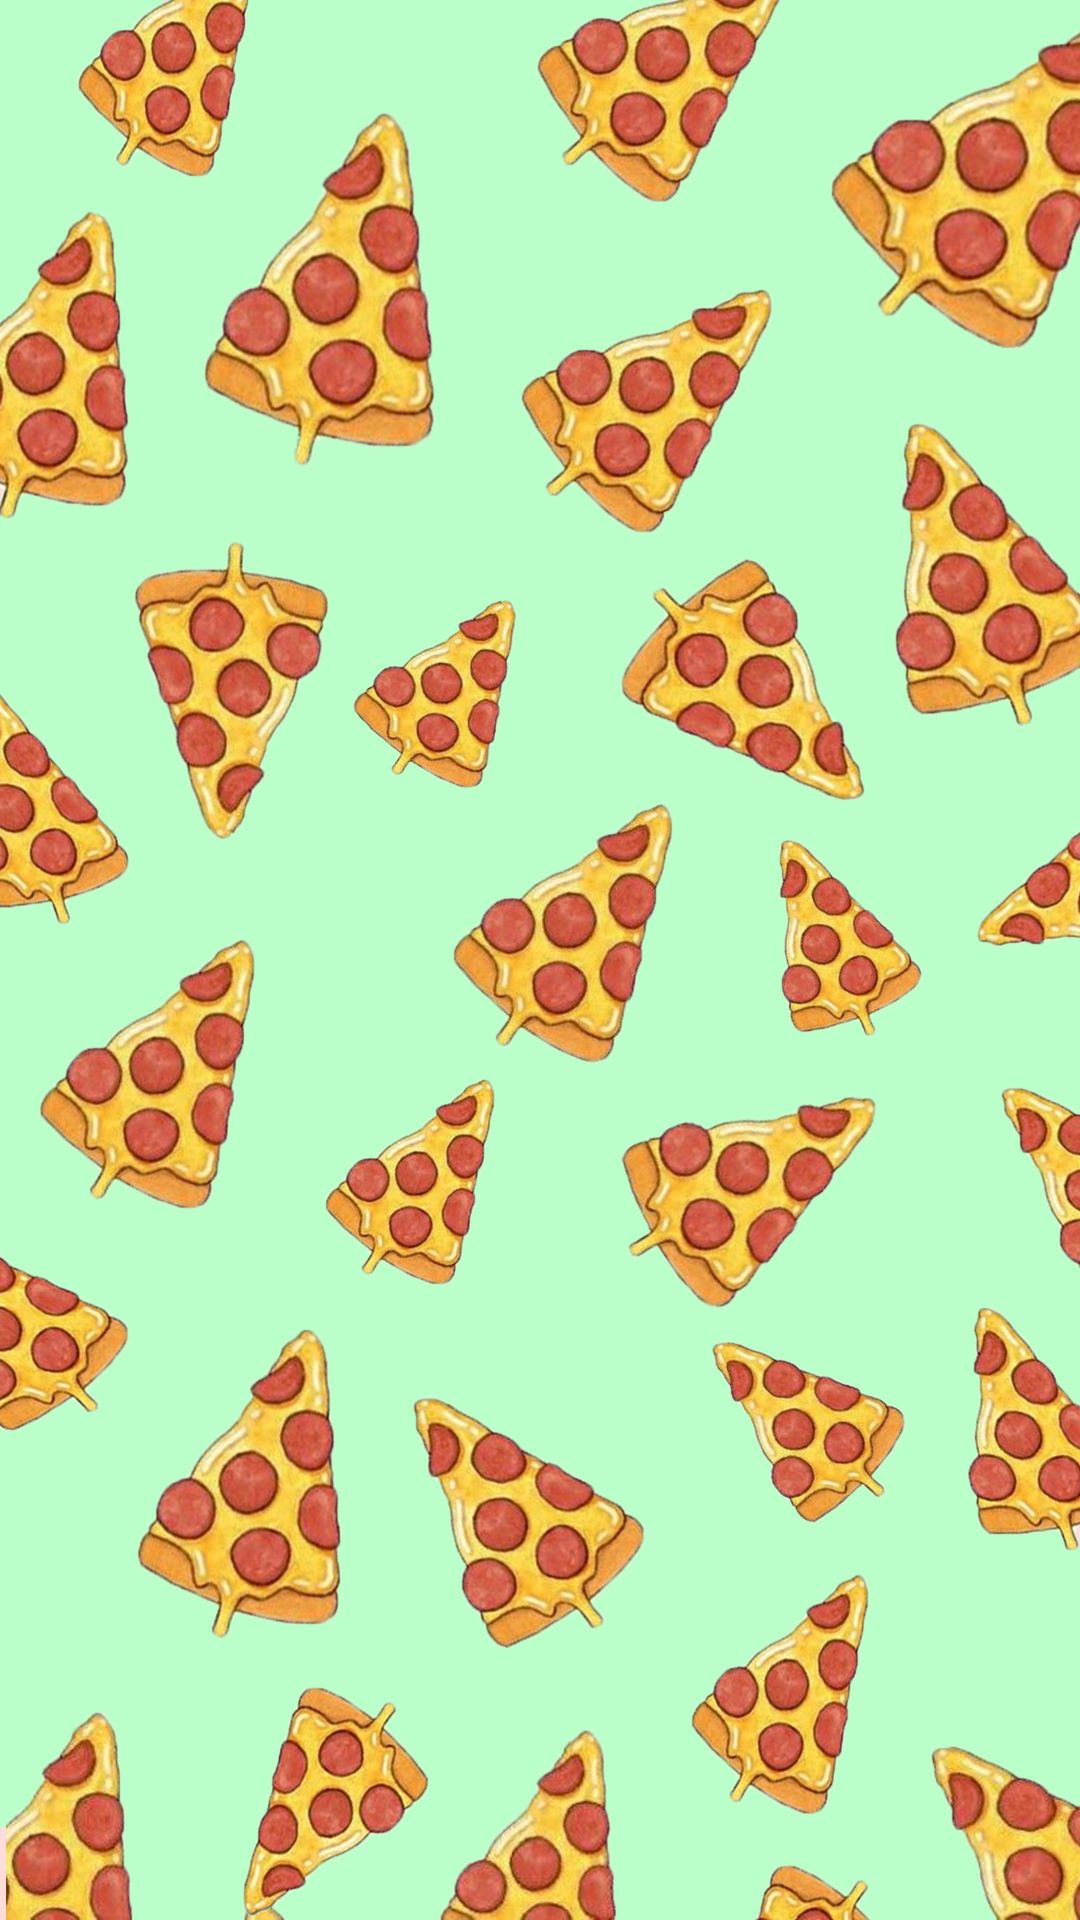 pizza wallpaper